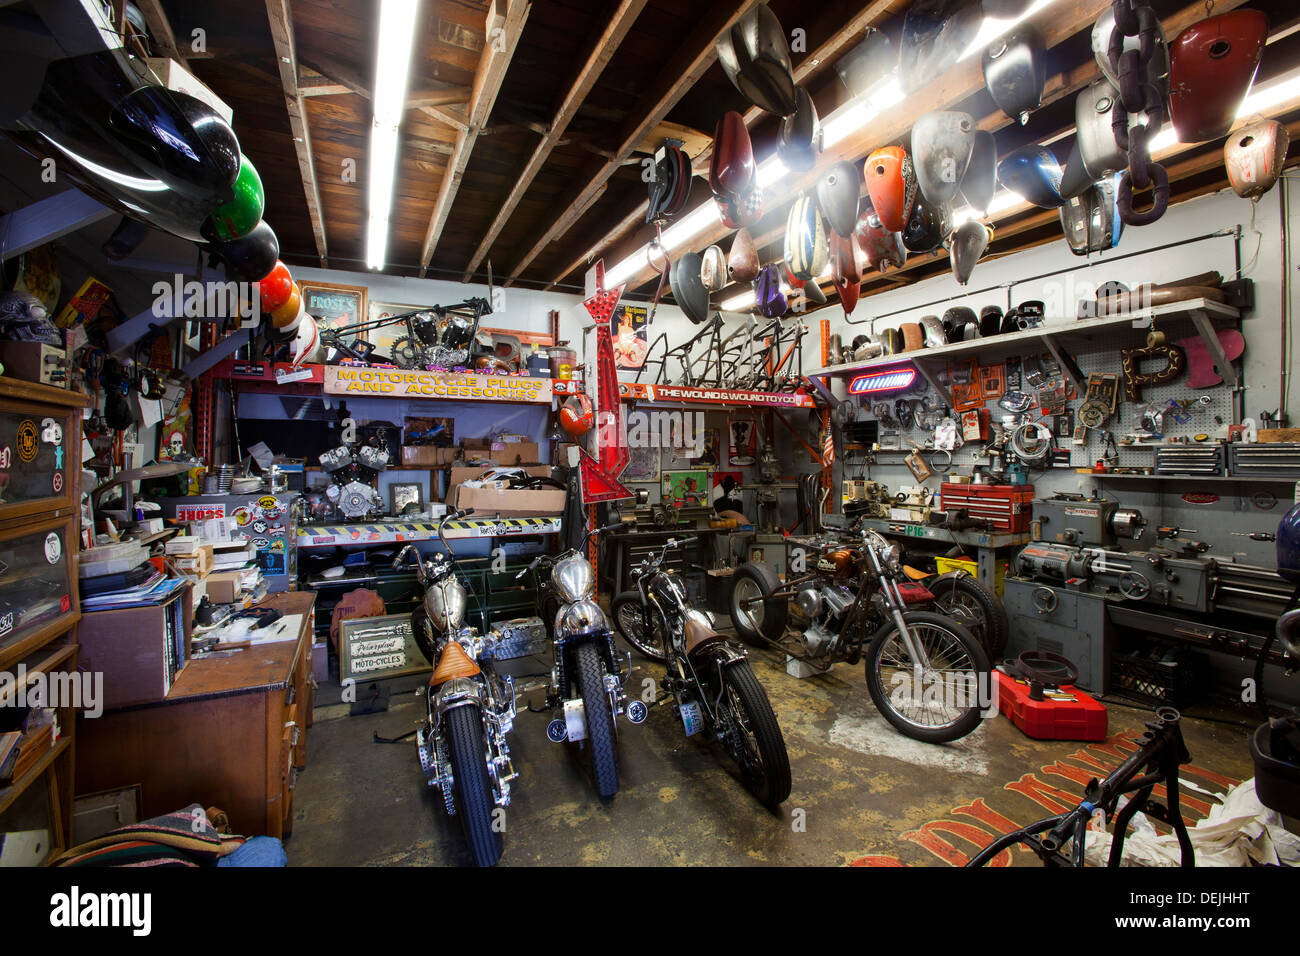 Powerplant Motorcycle Company, Melrose Avenue, Los Angeles, California, Stati Uniti d'America Foto Stock